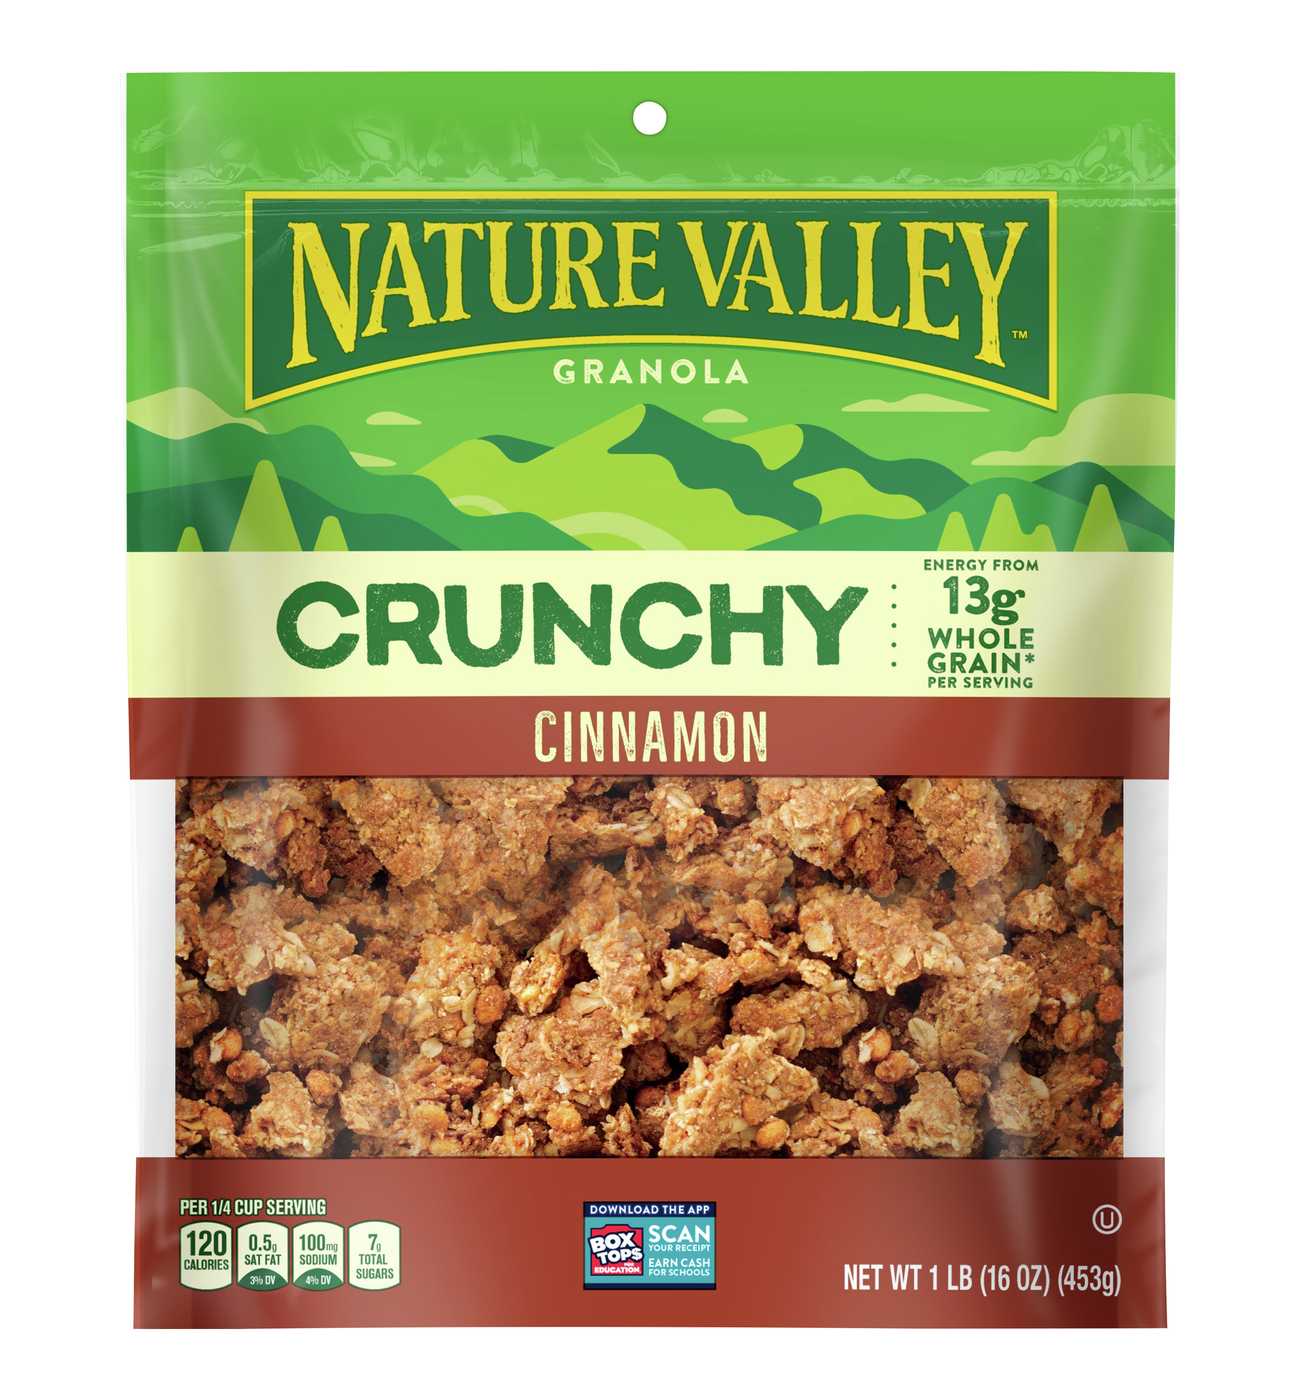 Nature Valley Crunchy Granola - Cinnamon; image 1 of 2